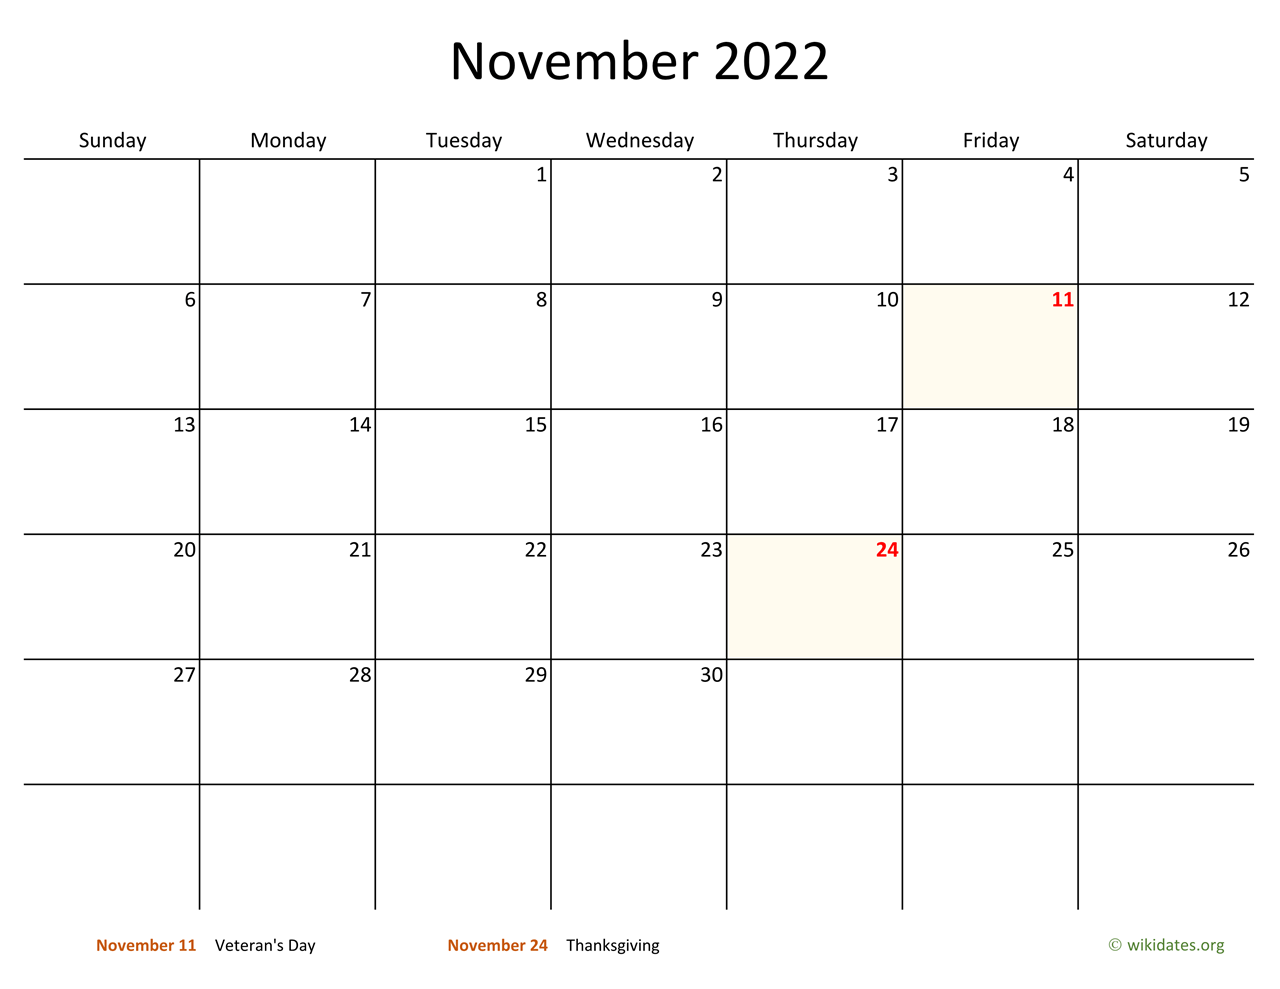 November 2022 Calendar Thanksgiving November 2022 Calendar With Bigger Boxes | Wikidates.org